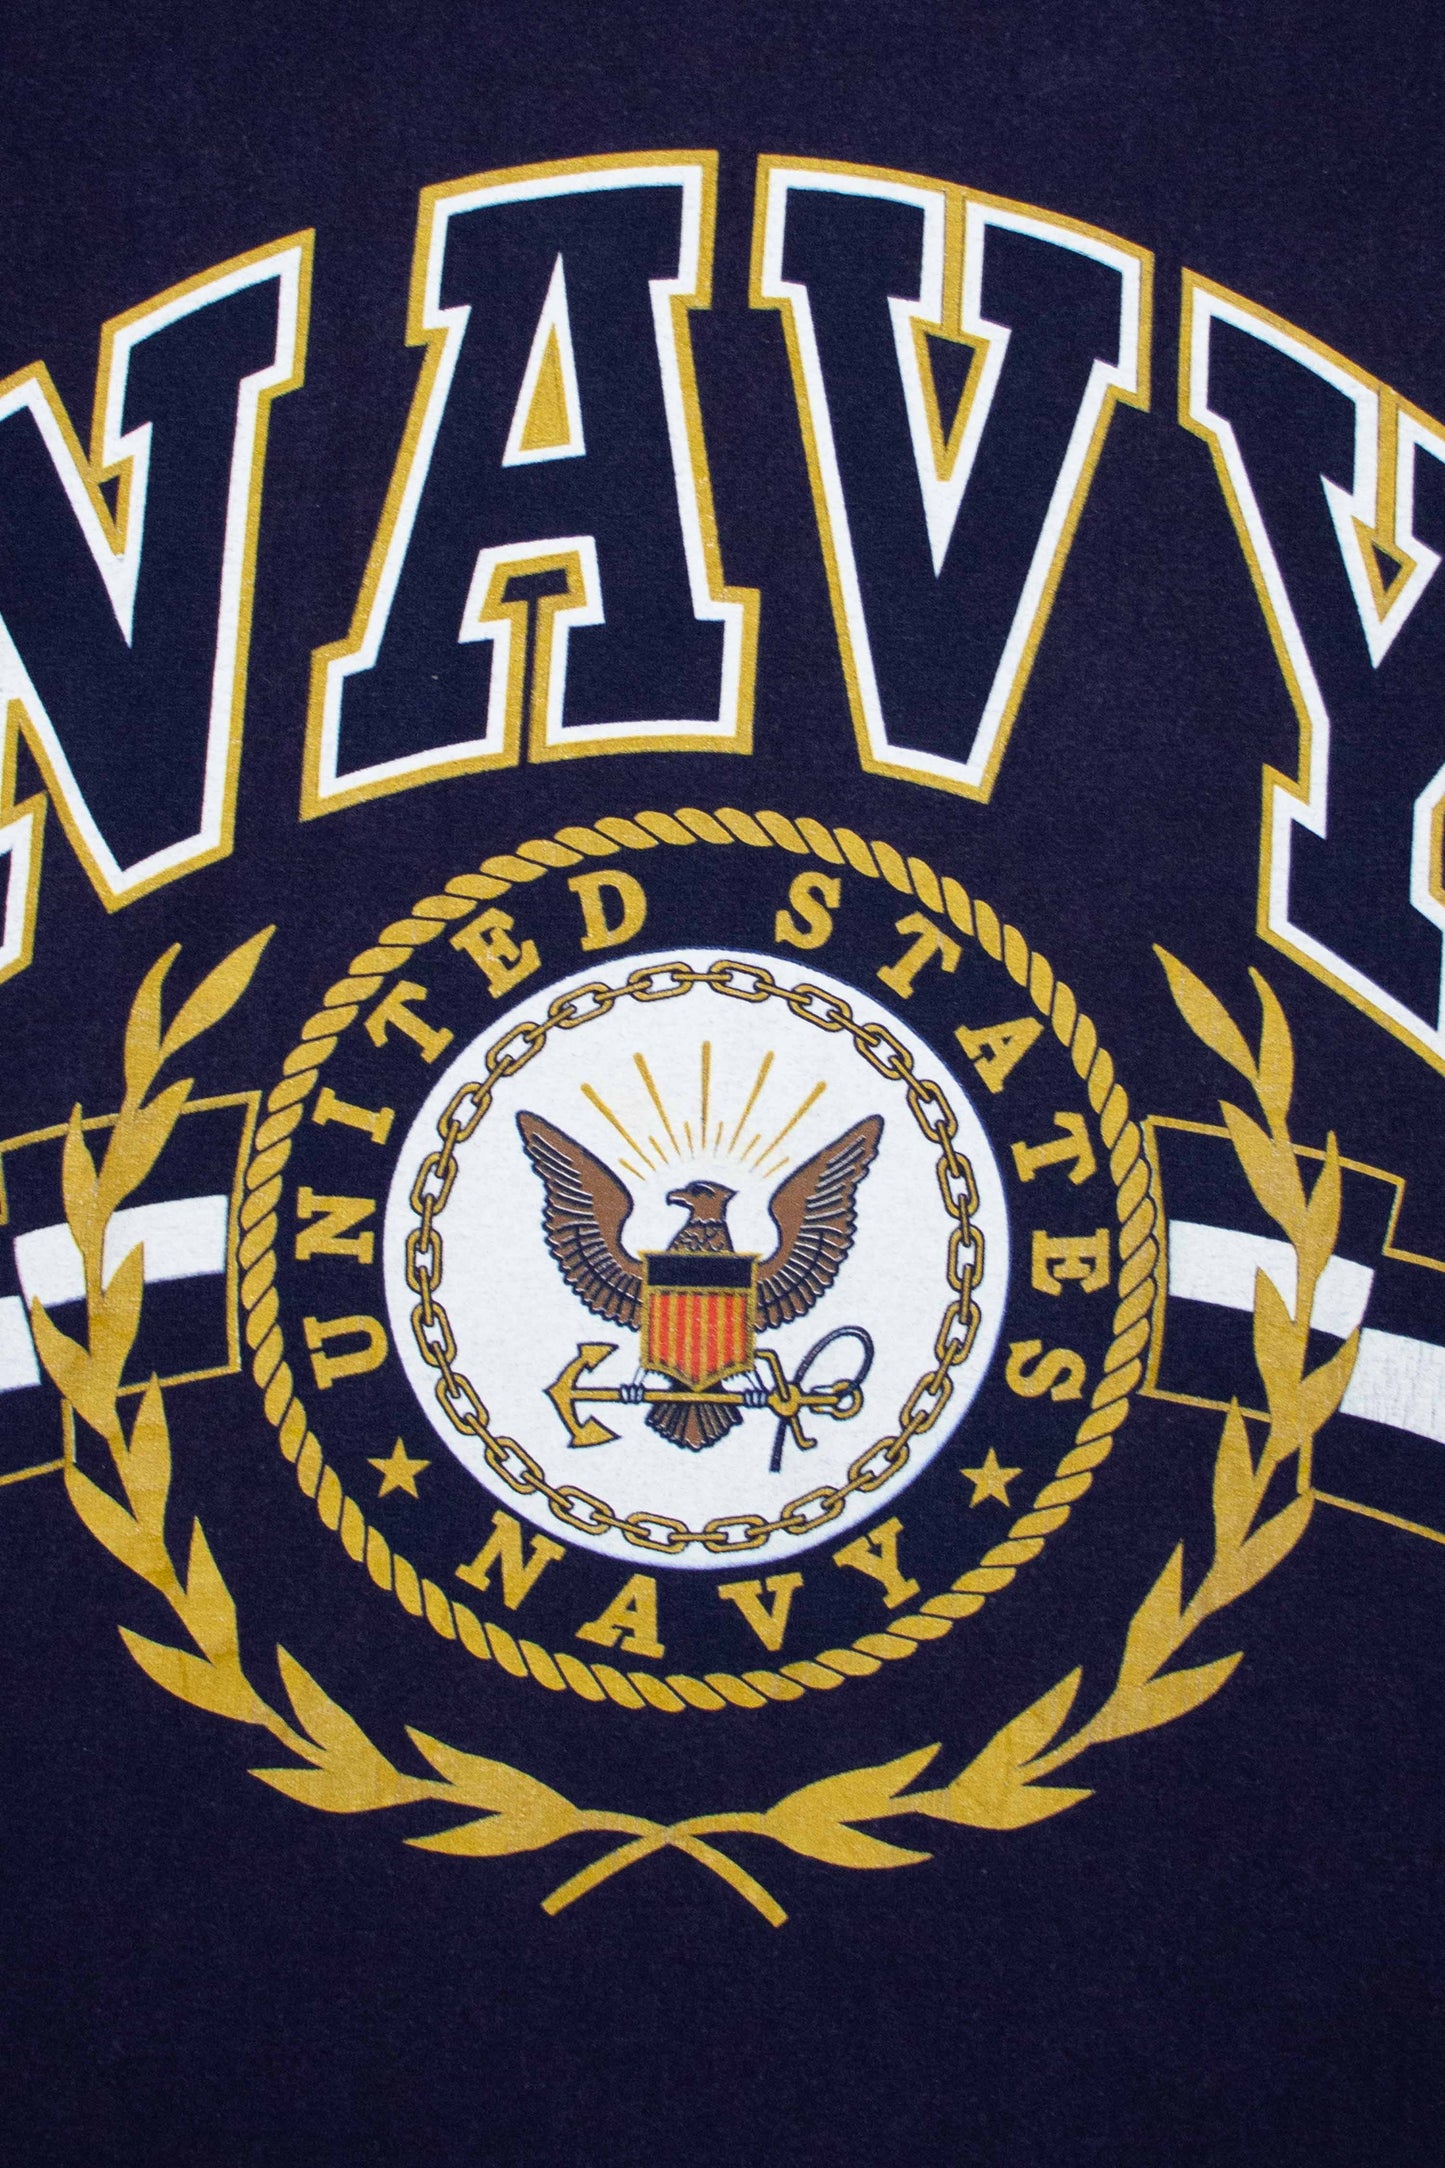 T-shirt Navy United States